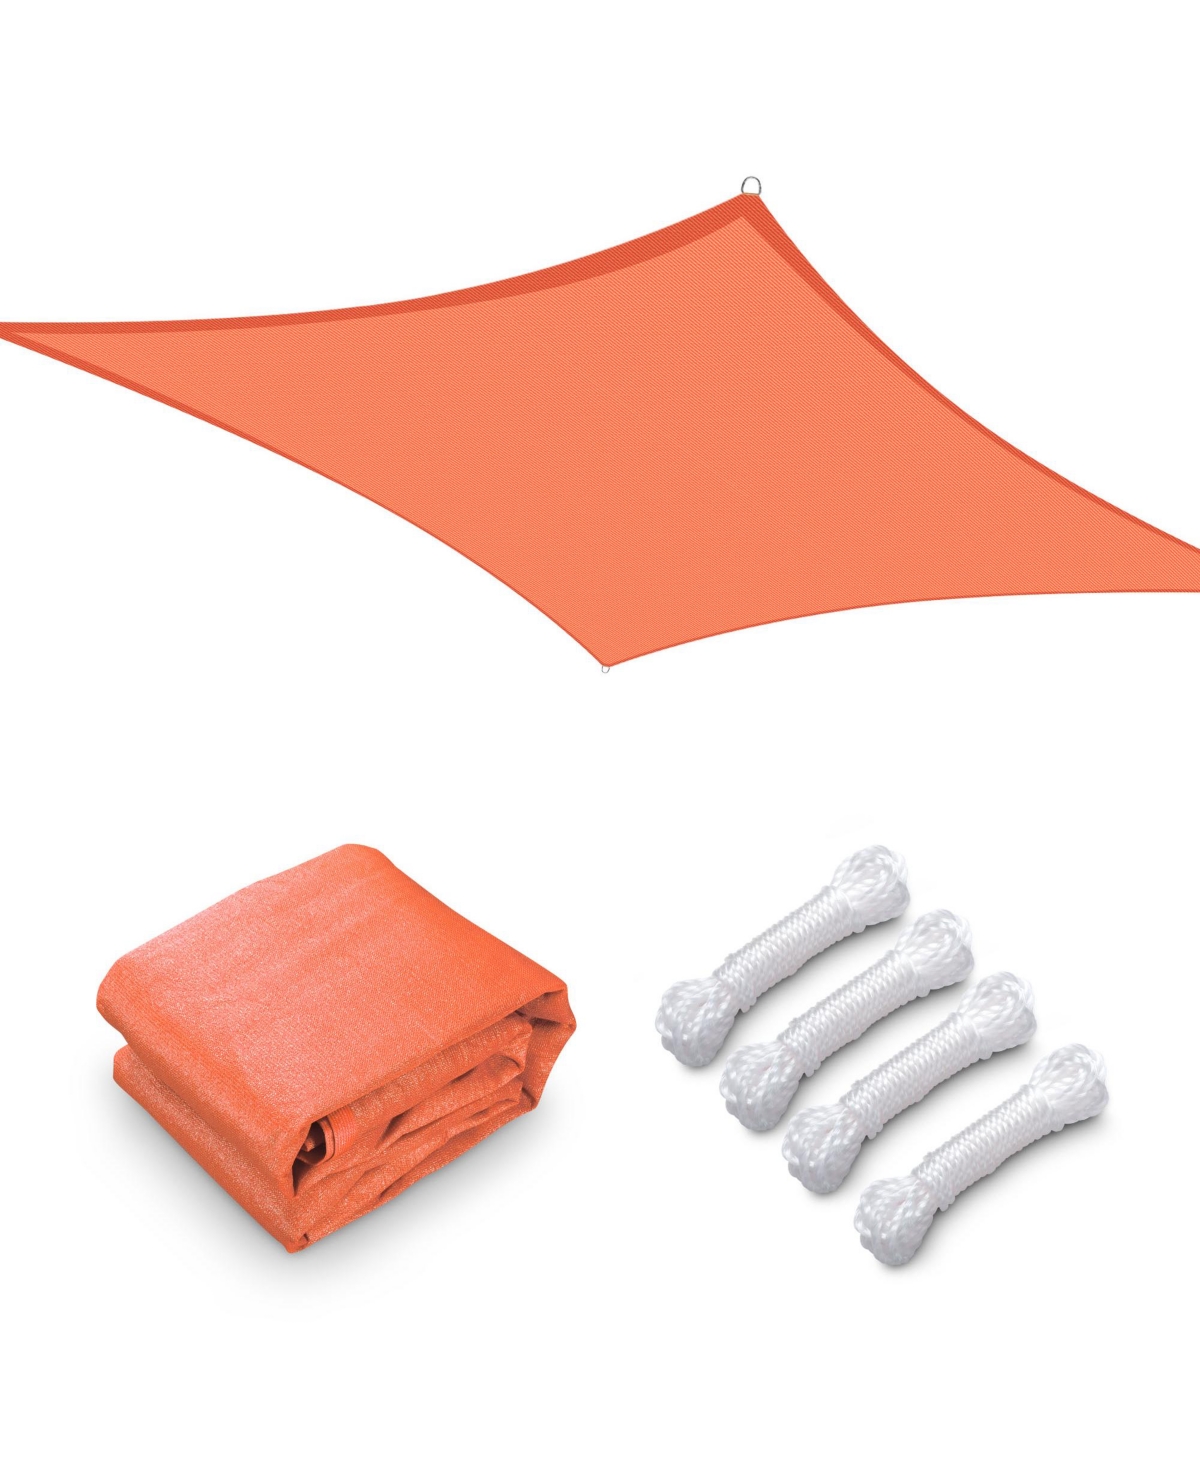 23x20 Ft 97% Uv Block Rectangle Sun Shade Sail Canopy Outdoor Patio Pool Yard - Bright orange